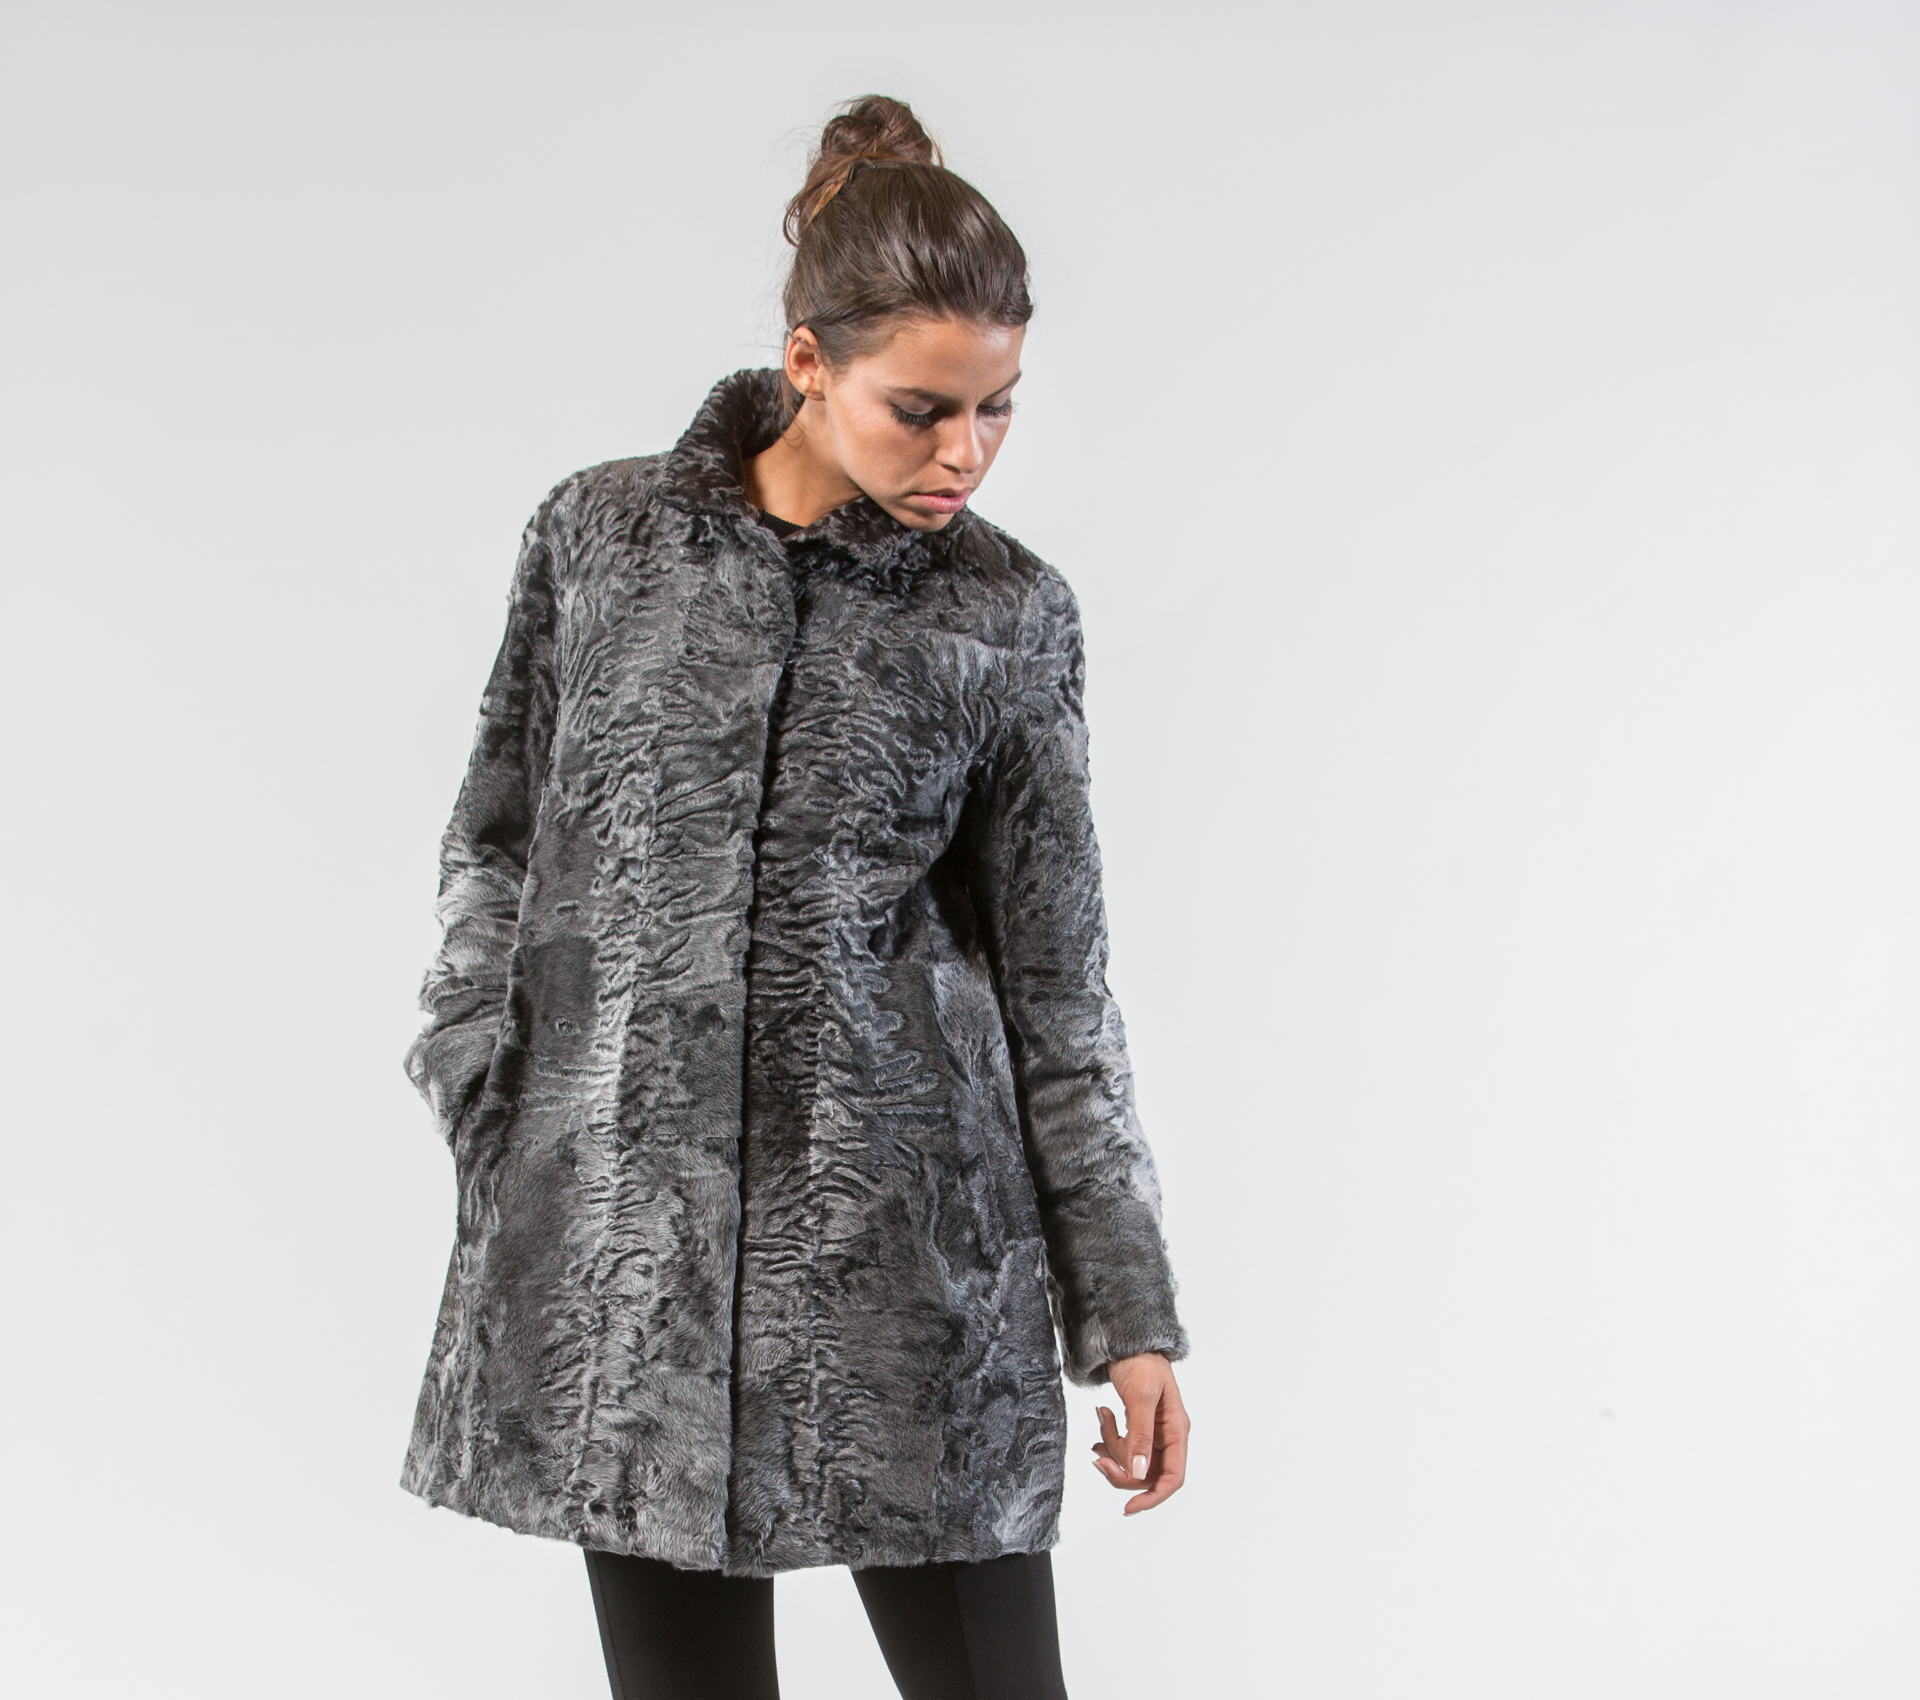 Gray Astrakhan Long Fur Jacket .100% Real Fur Coats and Accessories.